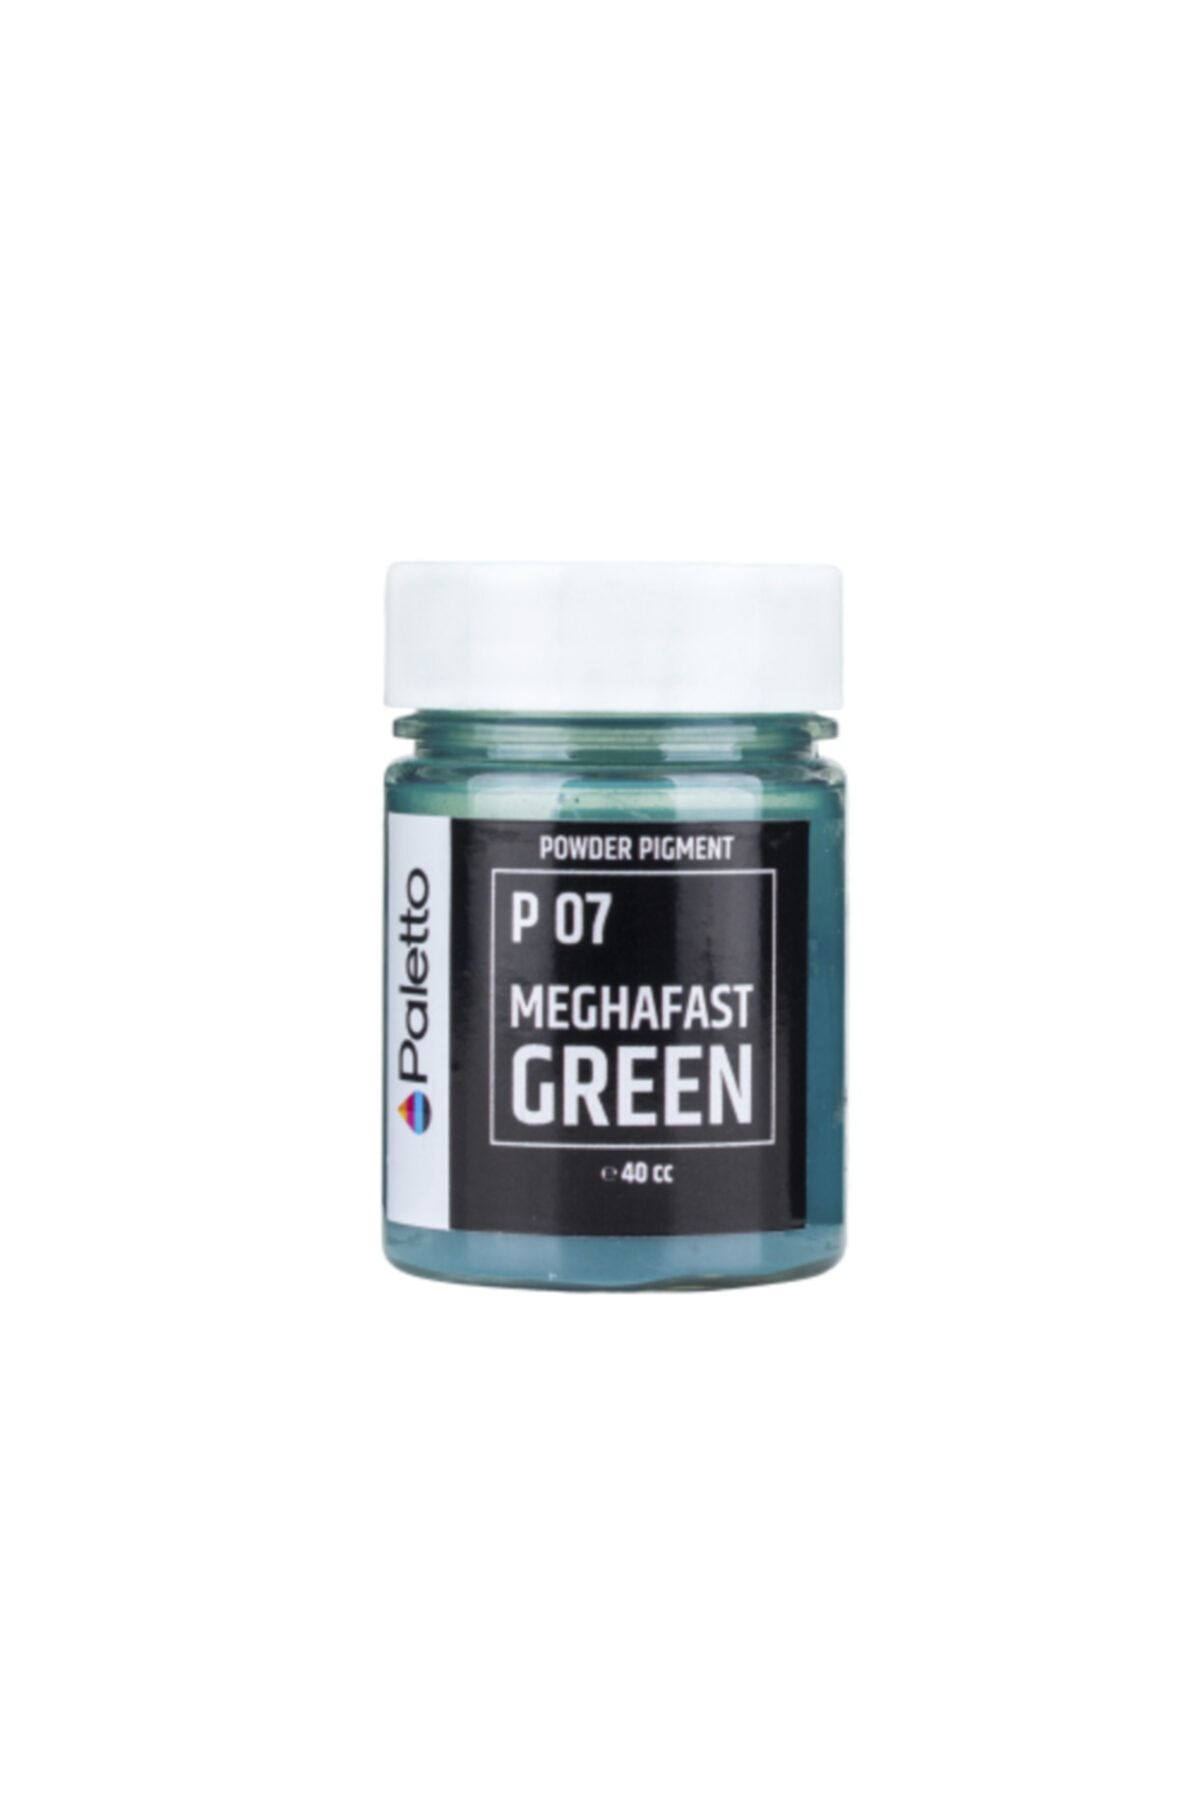 Craftic Paletto P07 Yeşil Toz Pigment Epoksi Boya 40cc